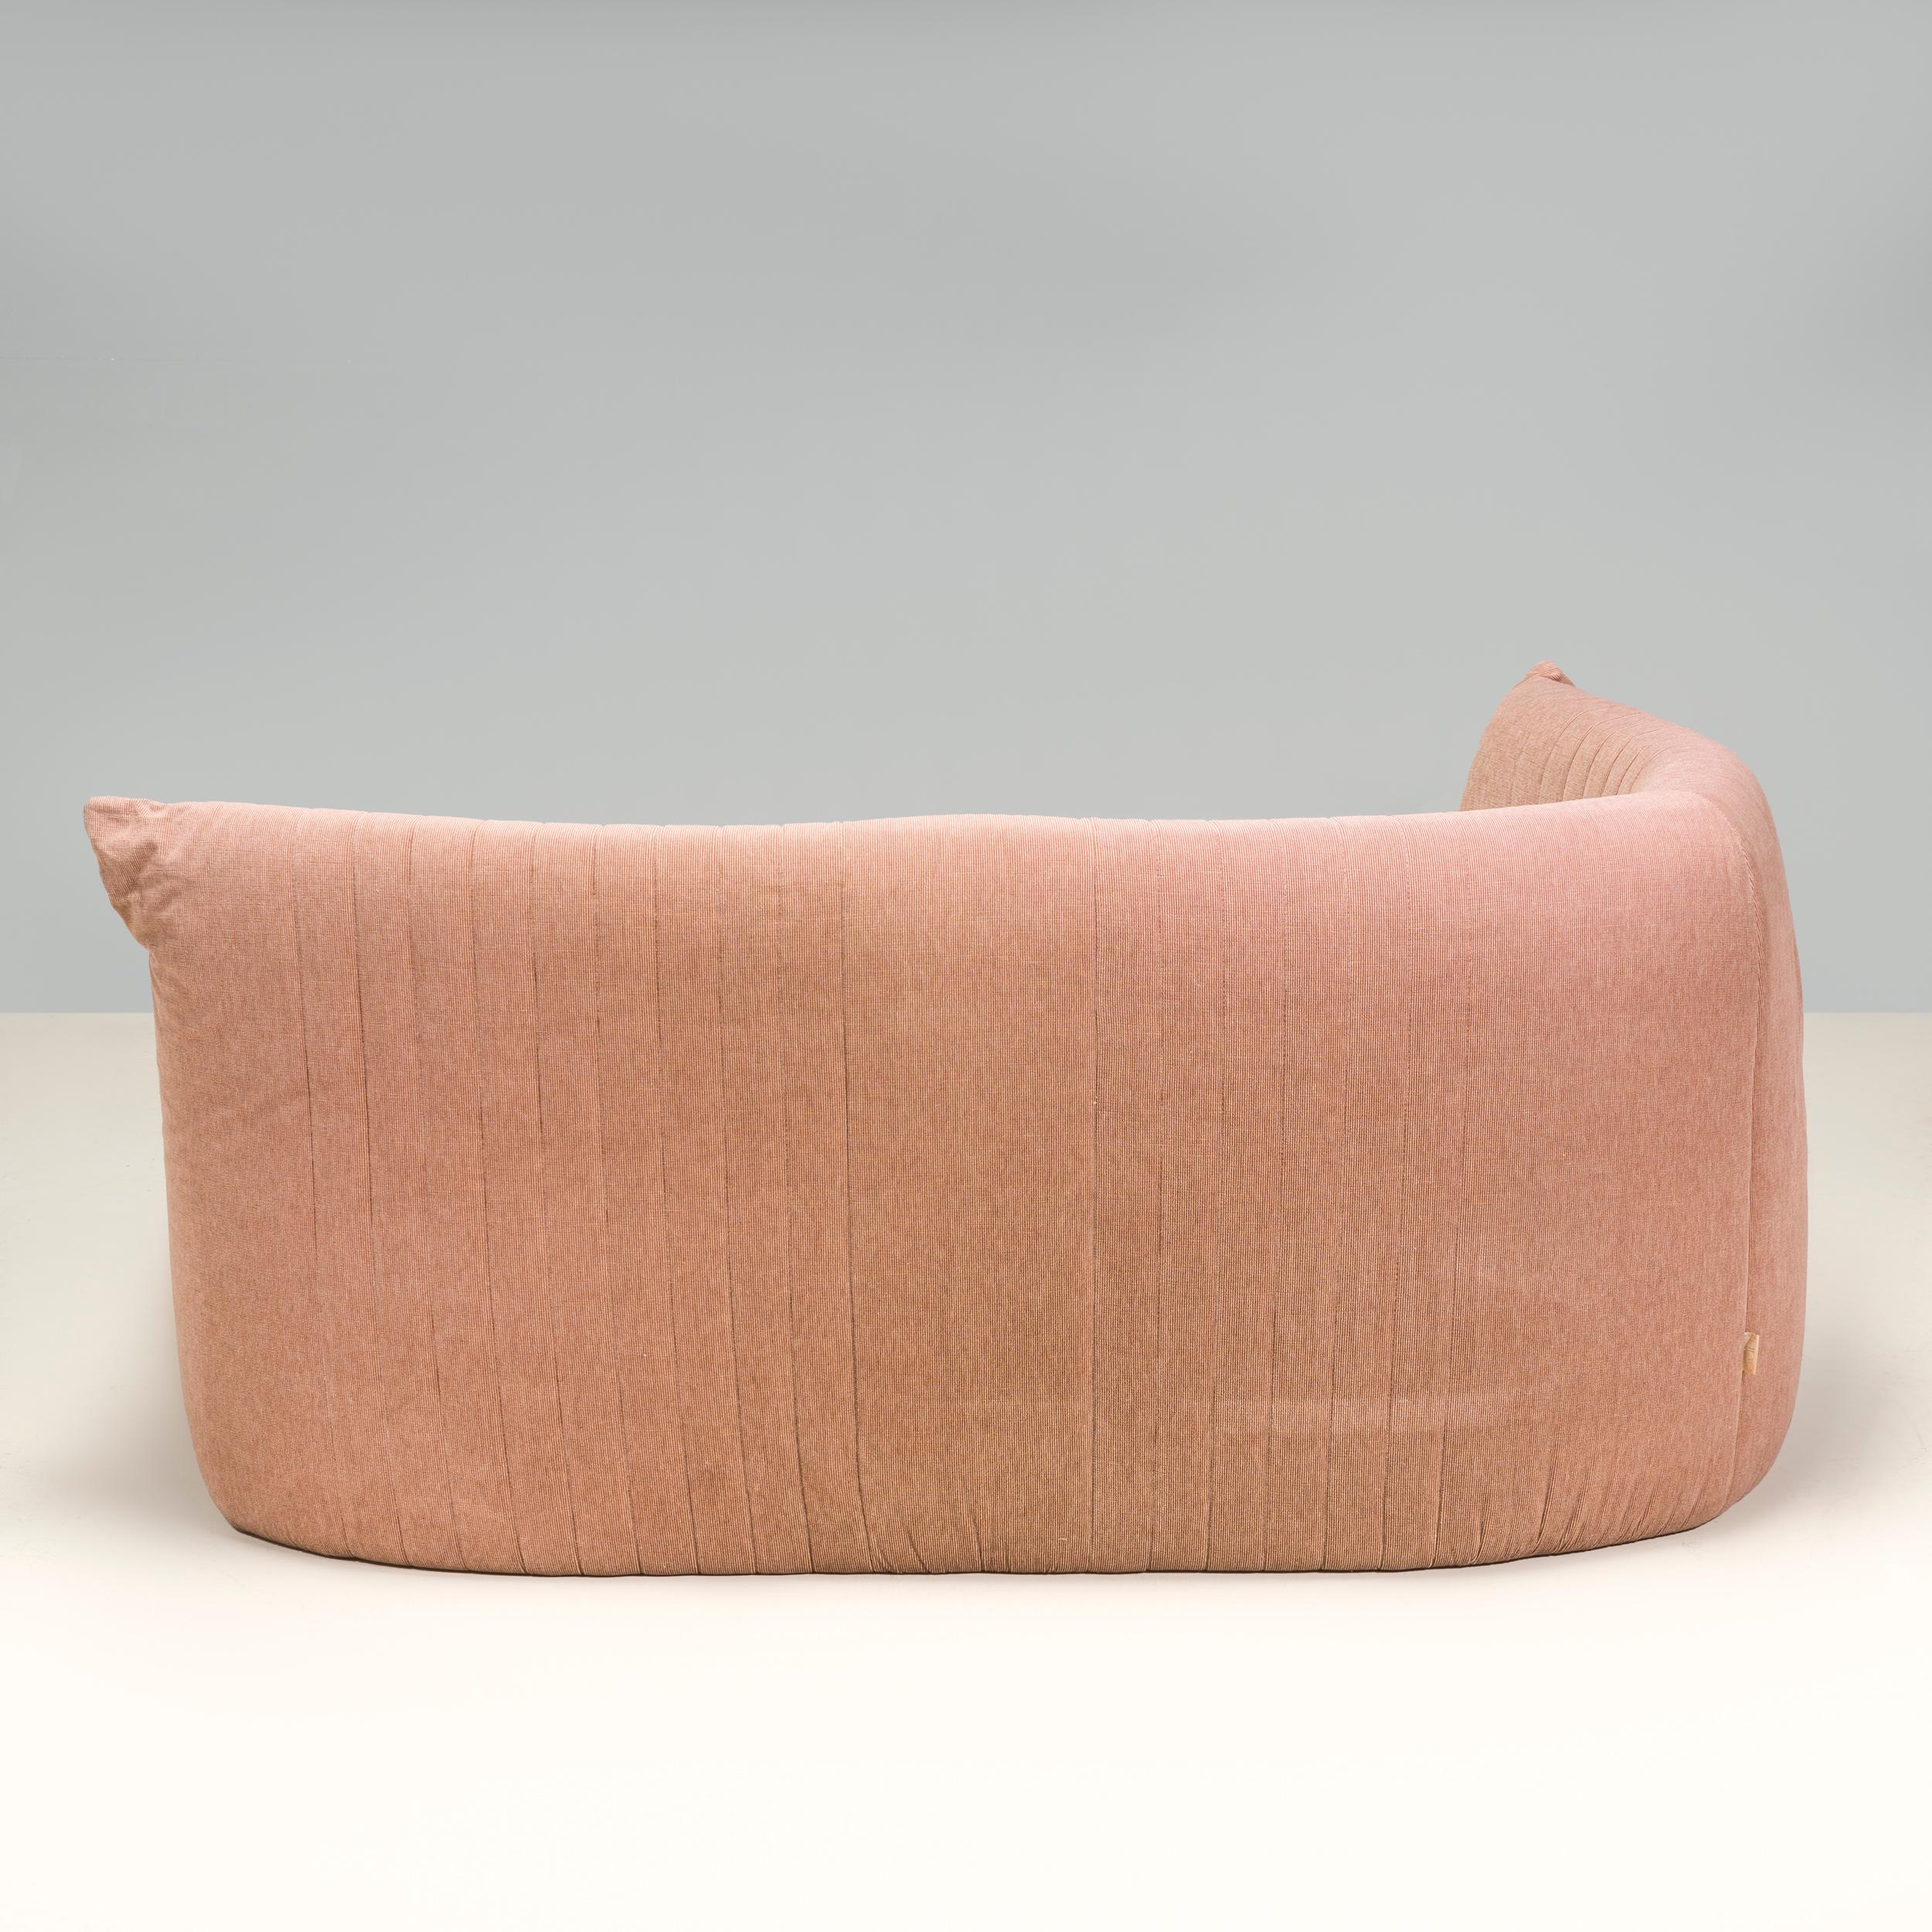 Michel Ducaroy for Ligne Roset Beige Fabric Aralia Corner Sofa In Fair Condition For Sale In London, GB